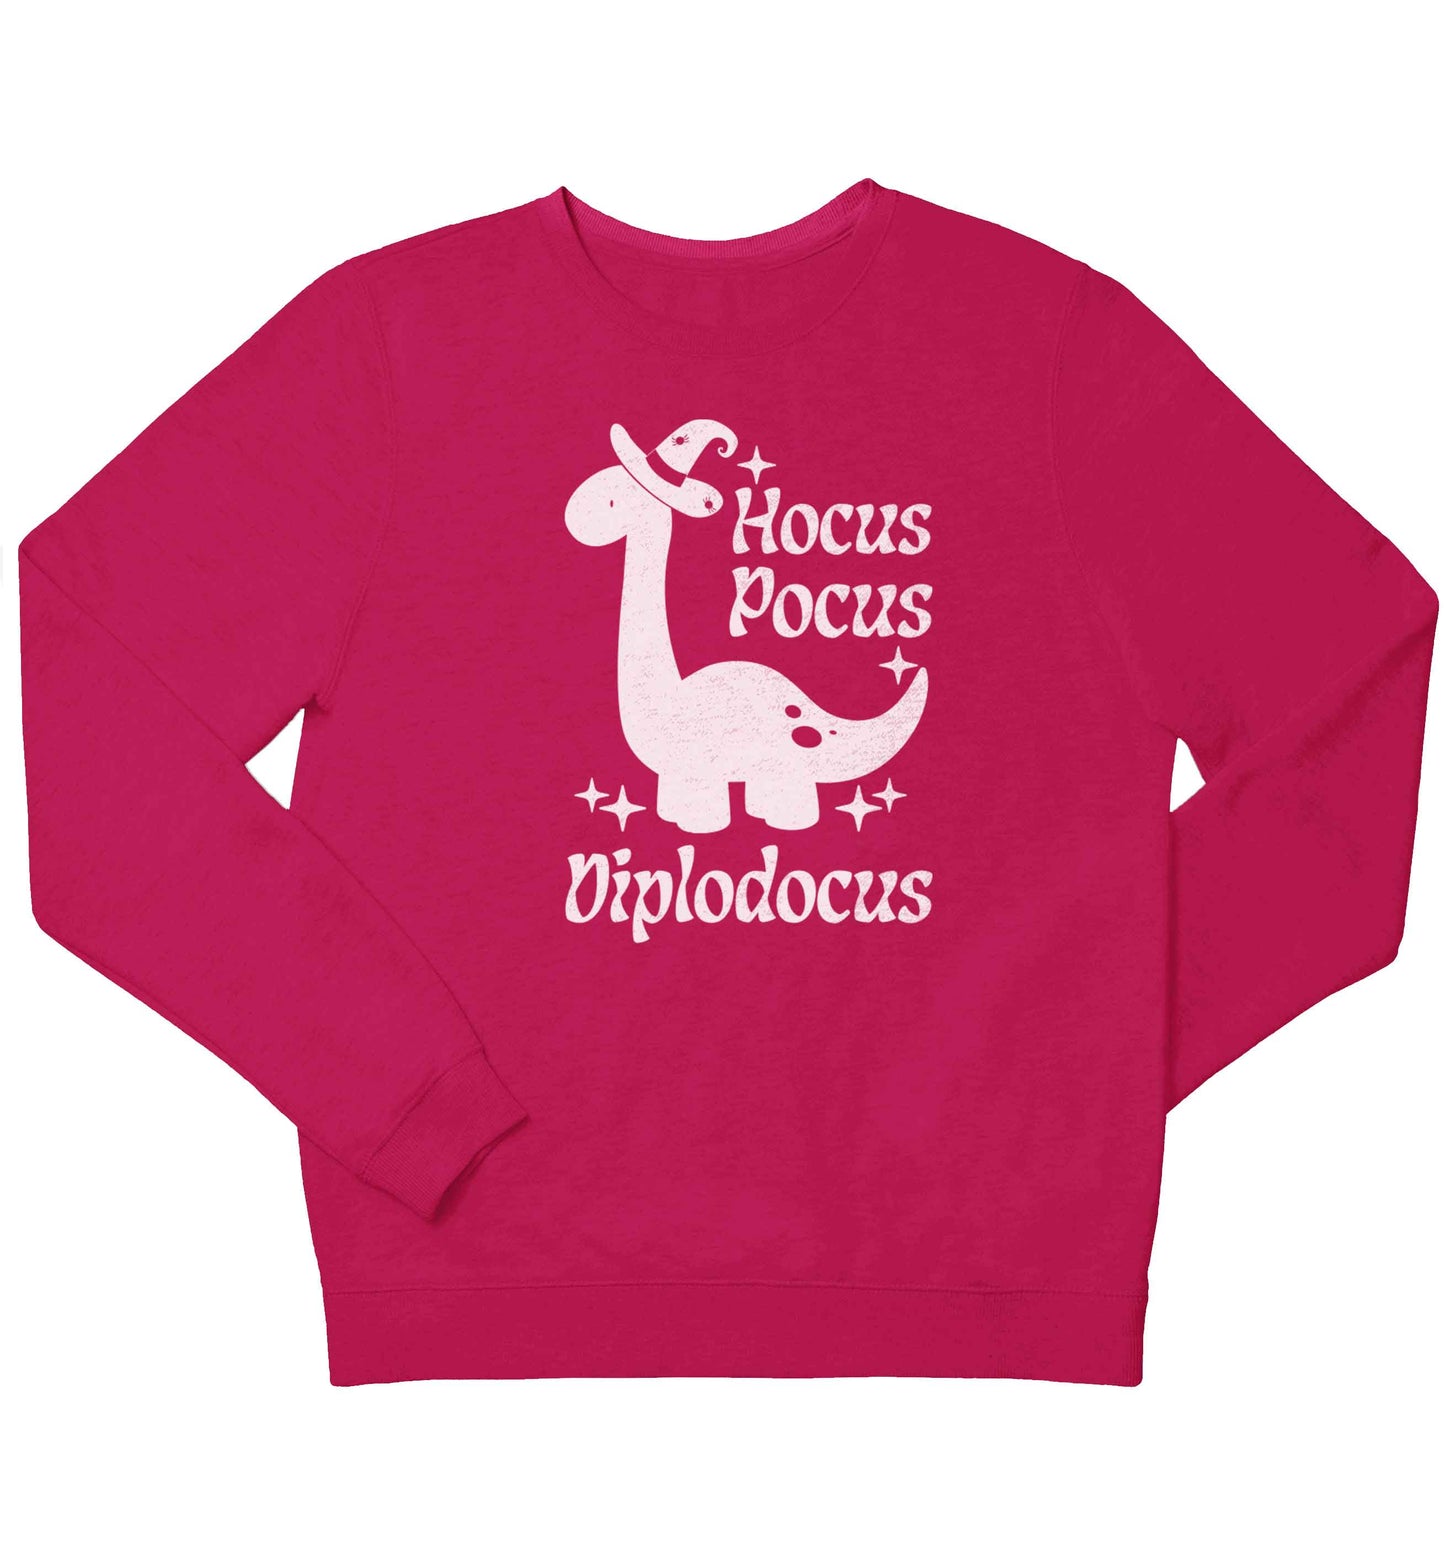 Hocus pocus diplodocus Kit children's pink sweater 12-13 Years